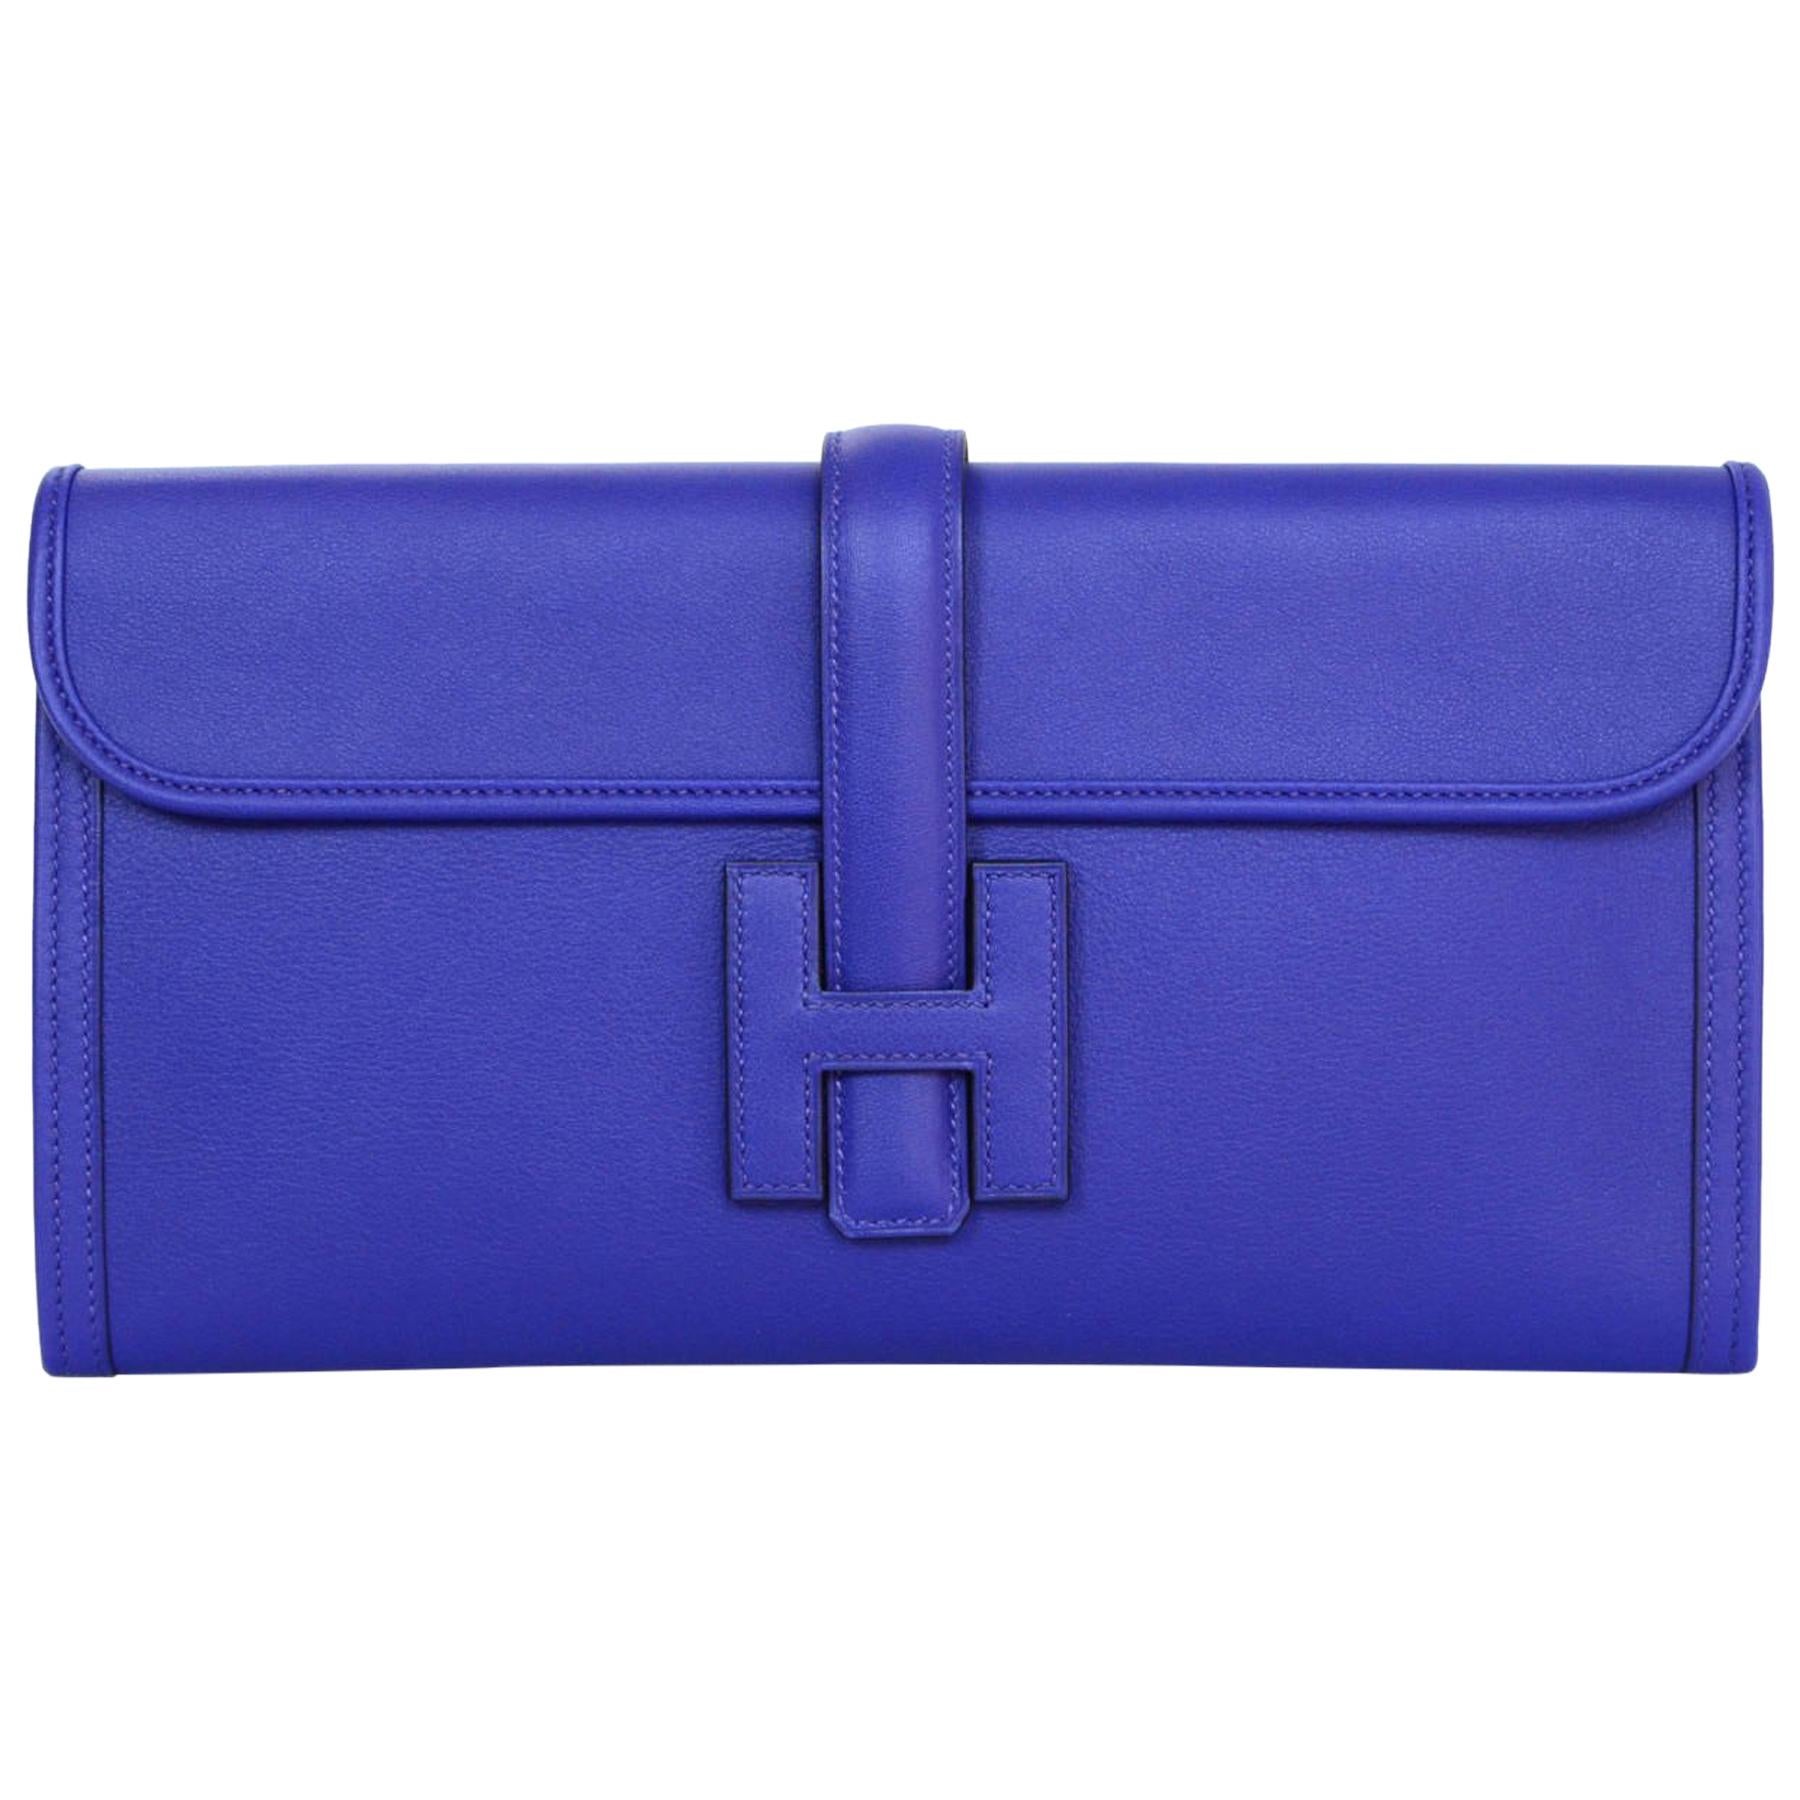 Hermes 2017 Blue Bleu Electrique Swift Leather Jige Elan 29 H Clutch Bag